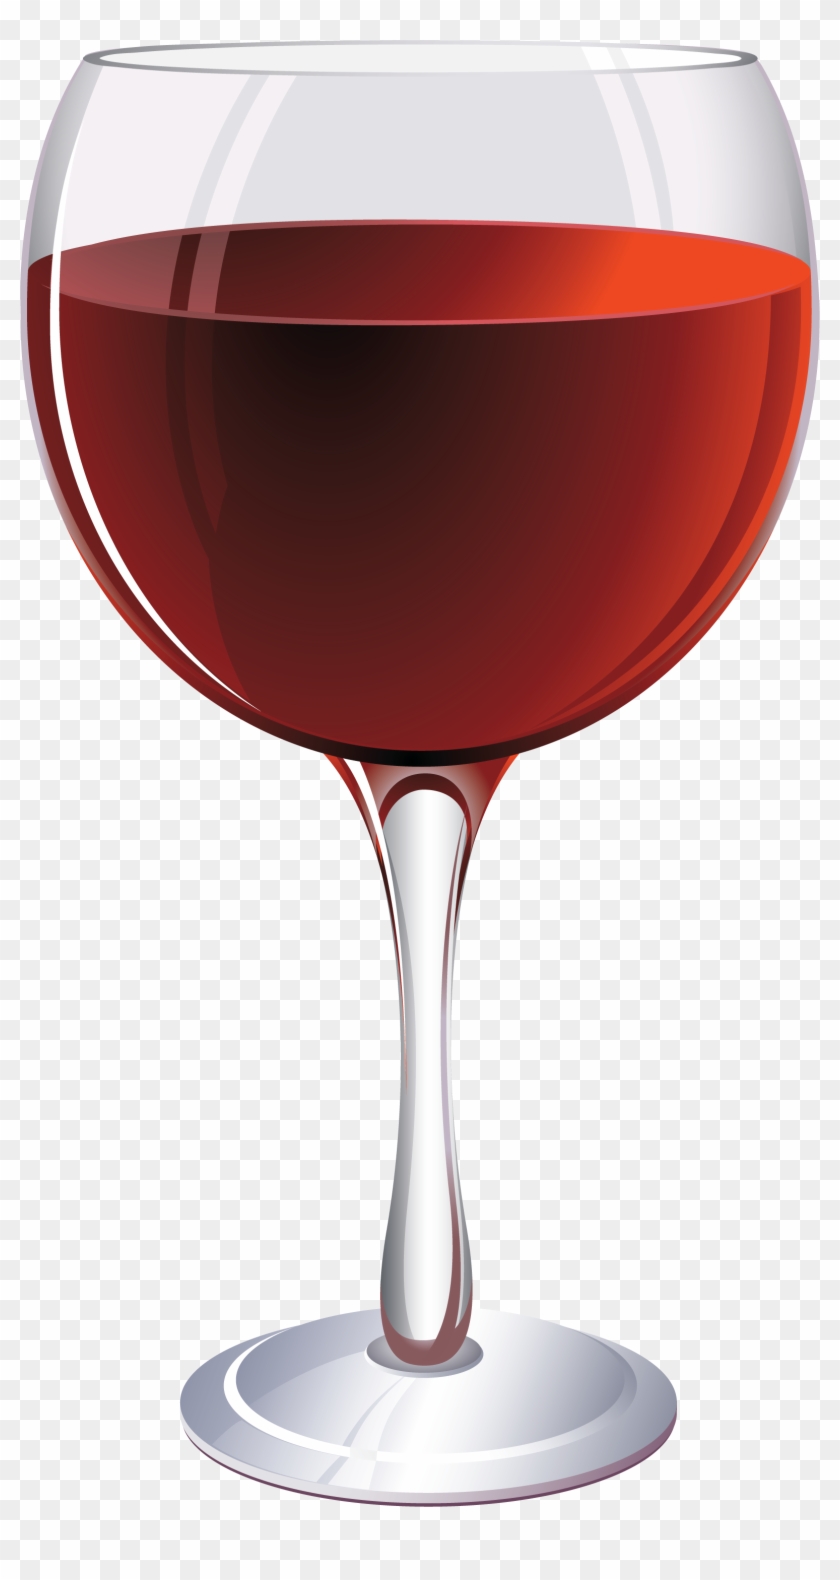 Wine Glass Go Red Wine Clipar - Wine Bottles And Glasses #388587